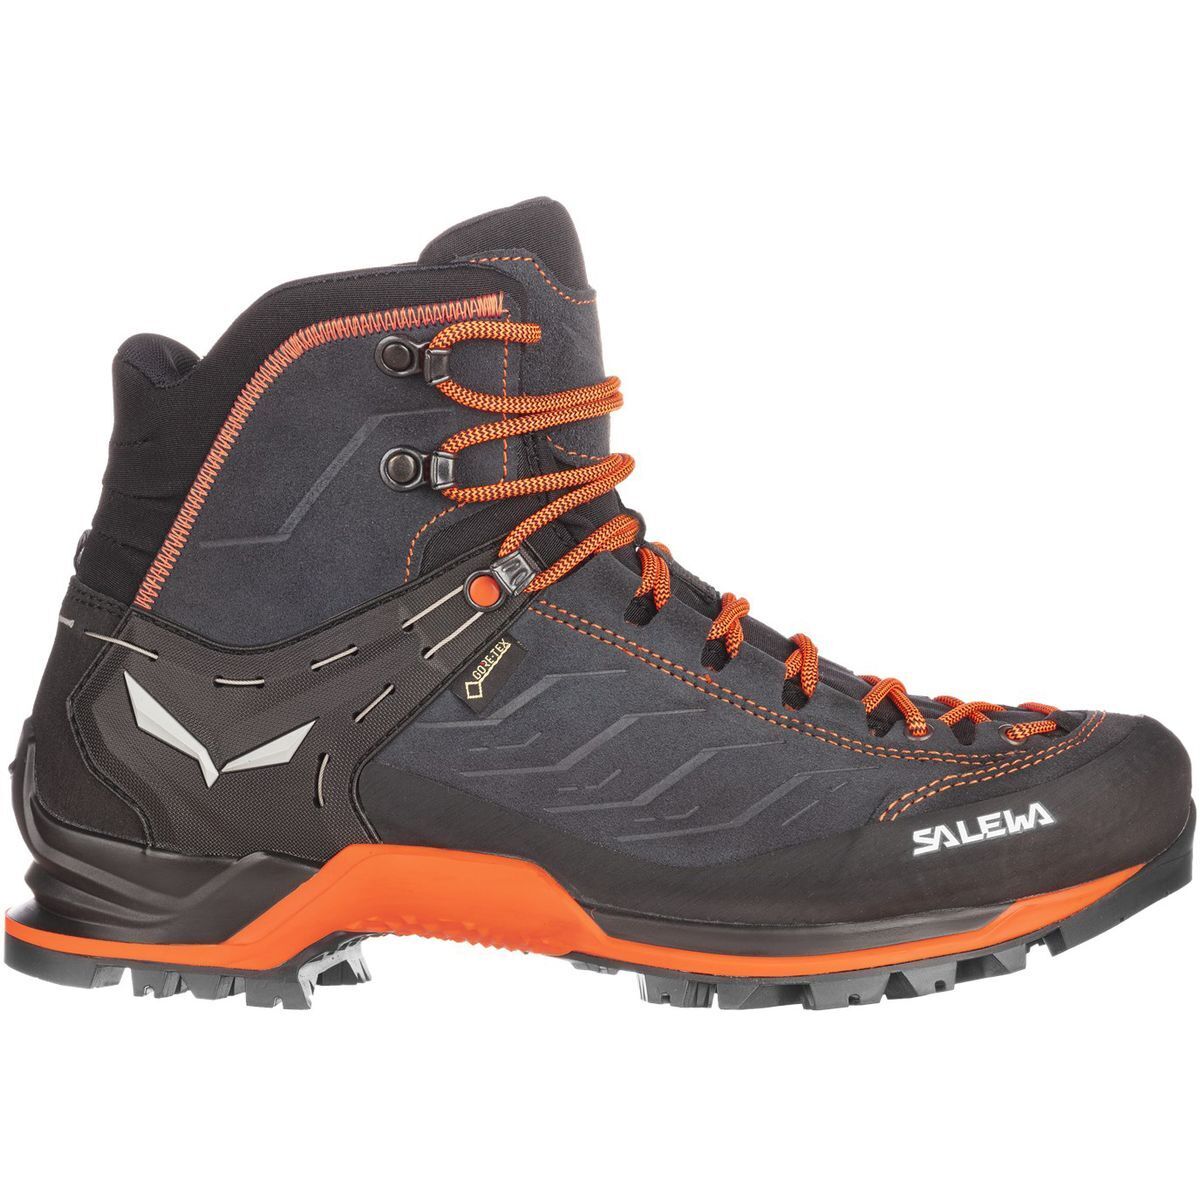 Salewa Mountain Trainer Mid GTX Backpacking Boot - Men's Asphalt/Fluo Orange 10.0